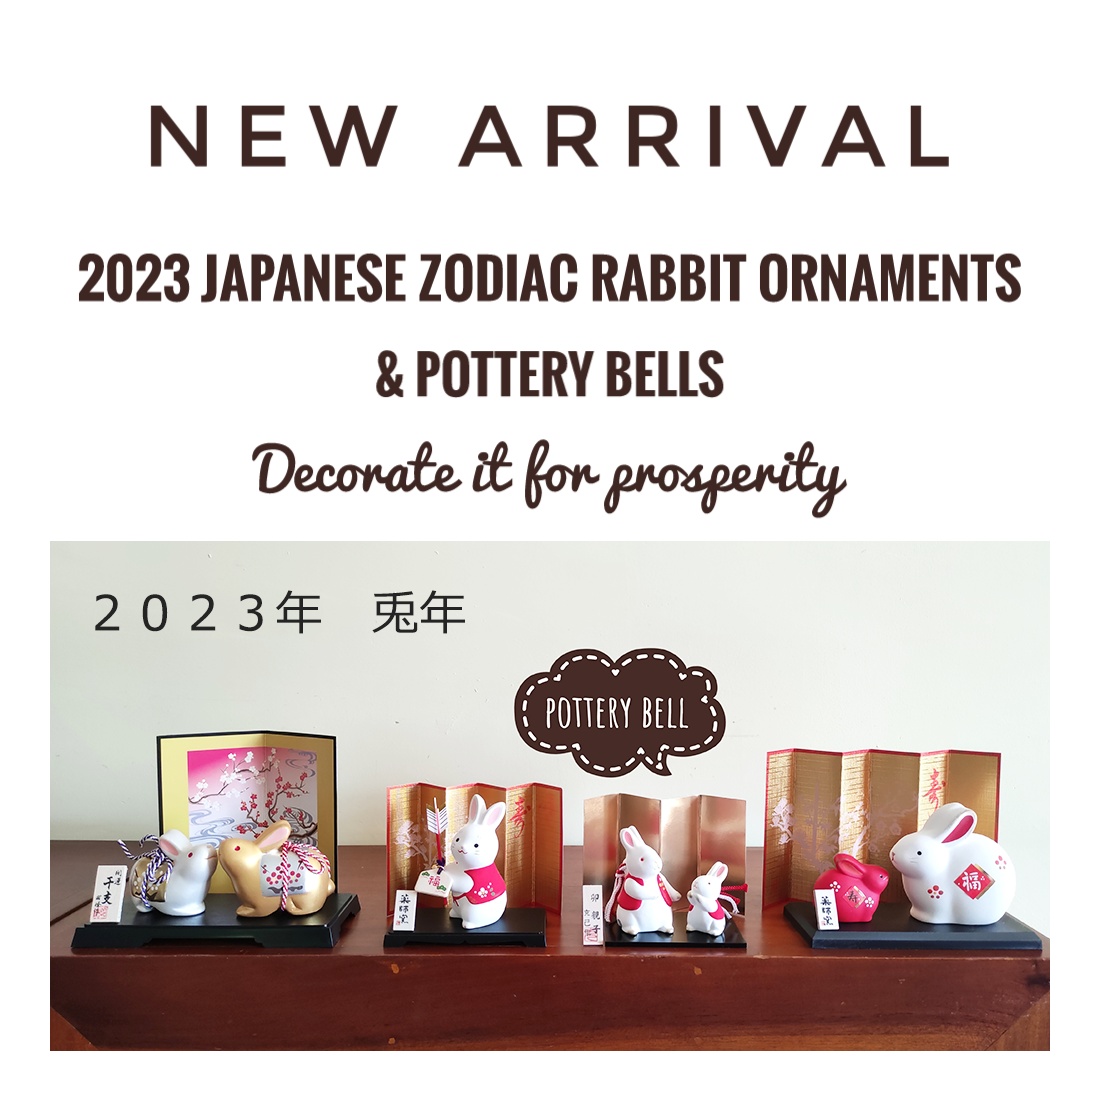 2023 Japanese zodiac rabbit ornaments and pottery bells